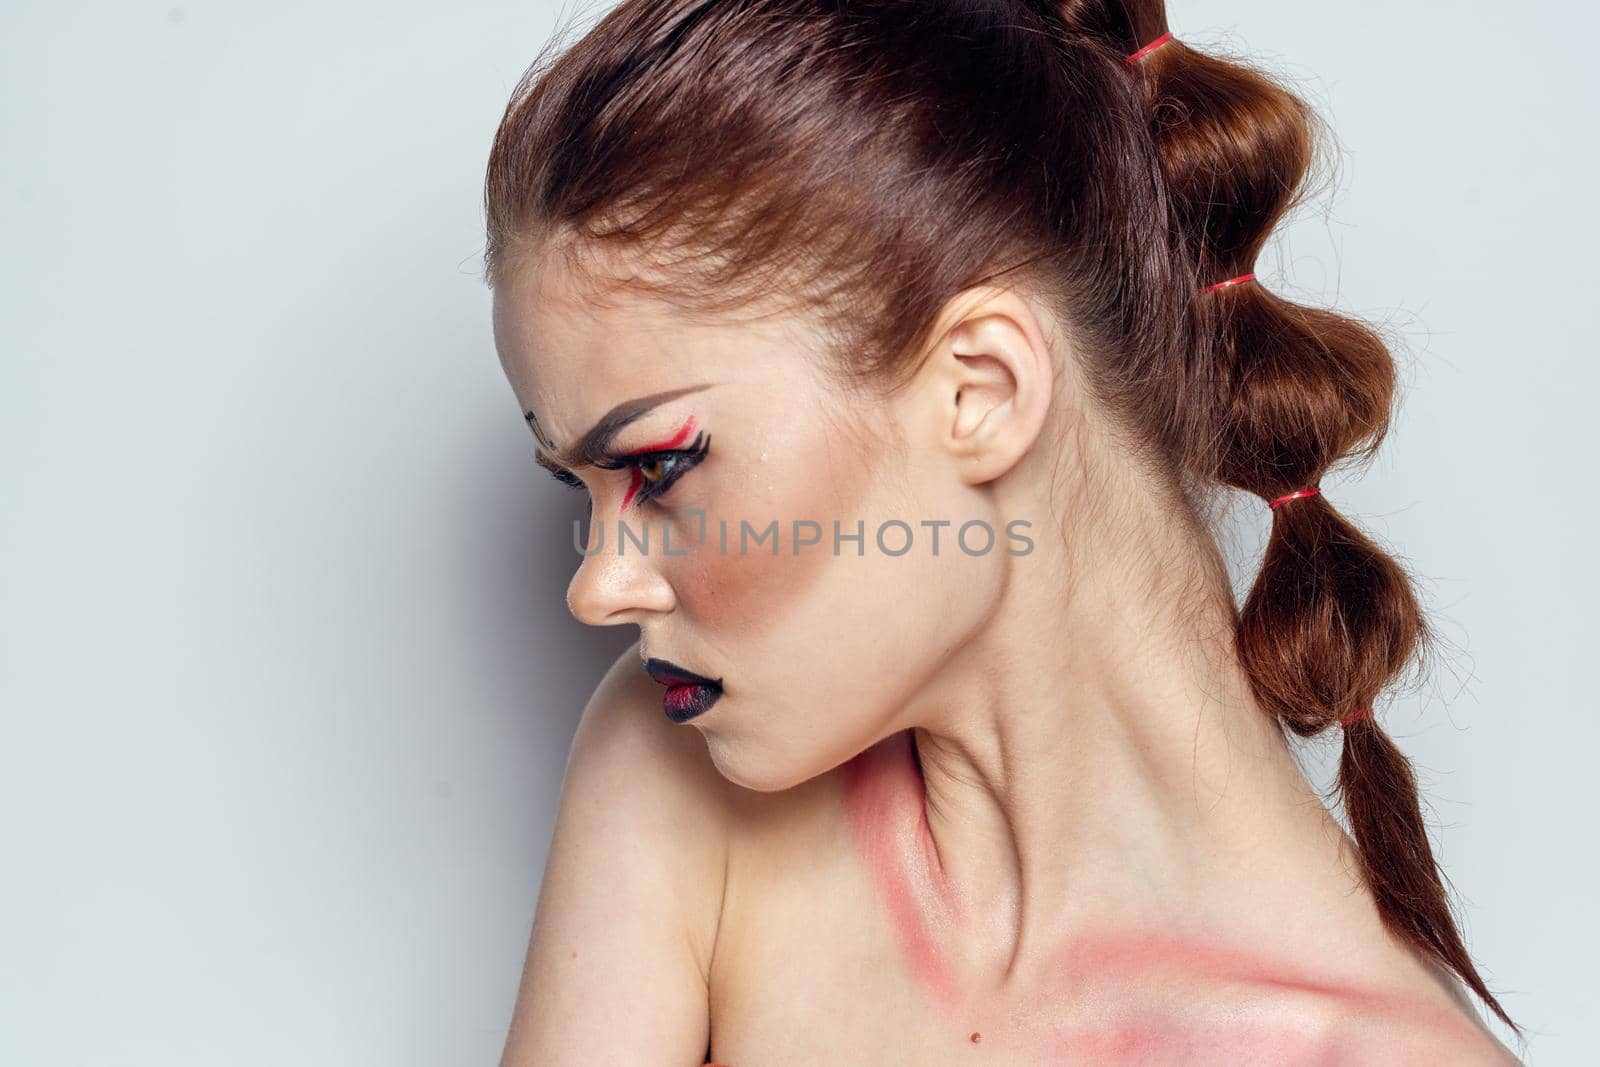 beautiful woman posing scorpio sign on forehead cosmetics light background. High quality photo